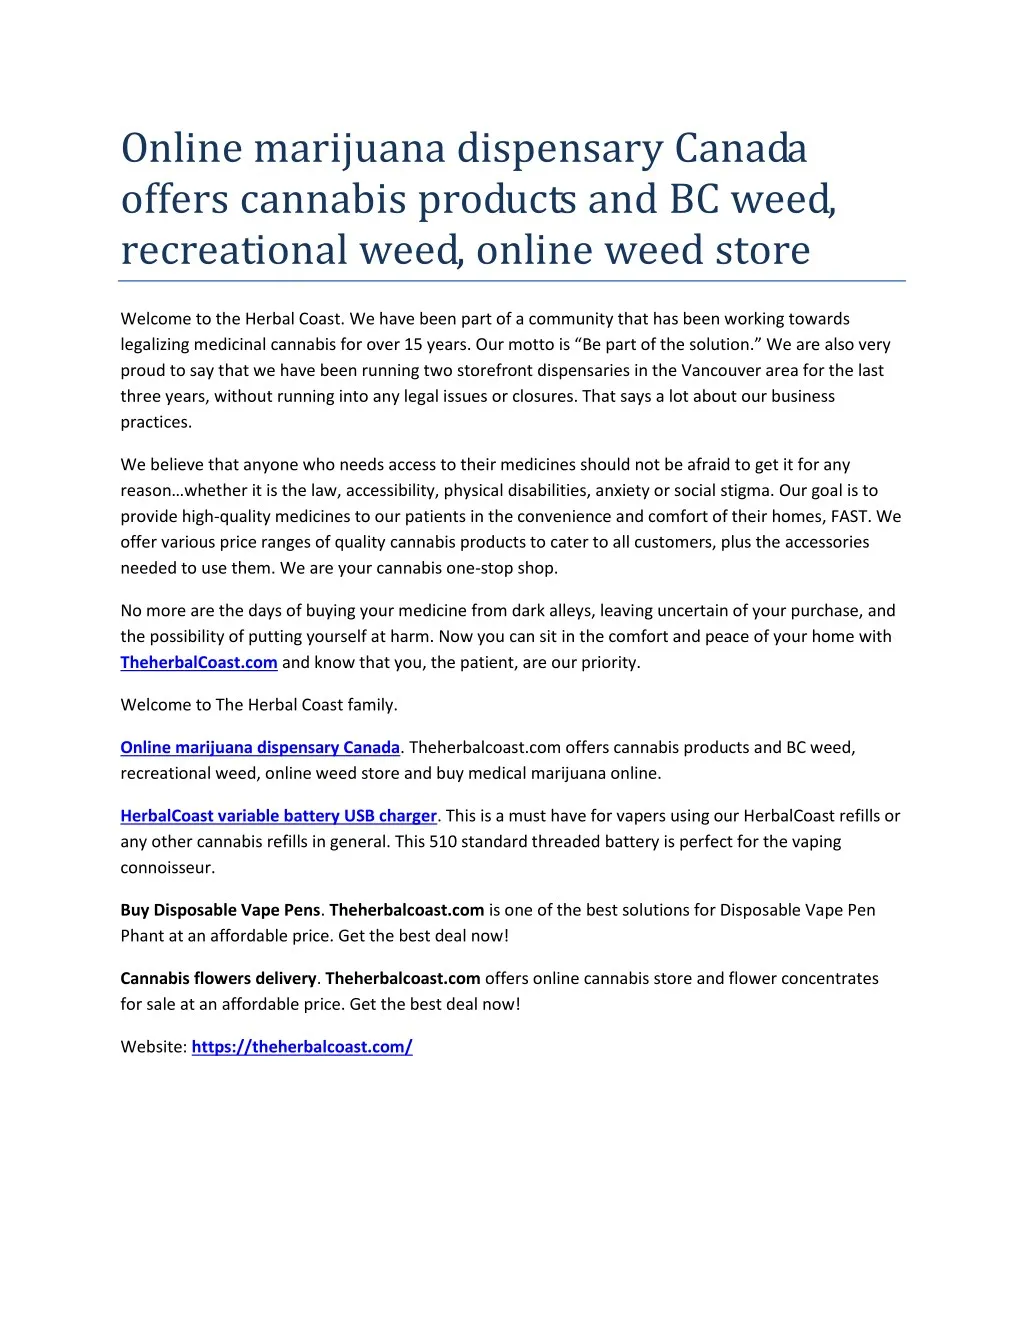 online marijuana dispensary canada offers